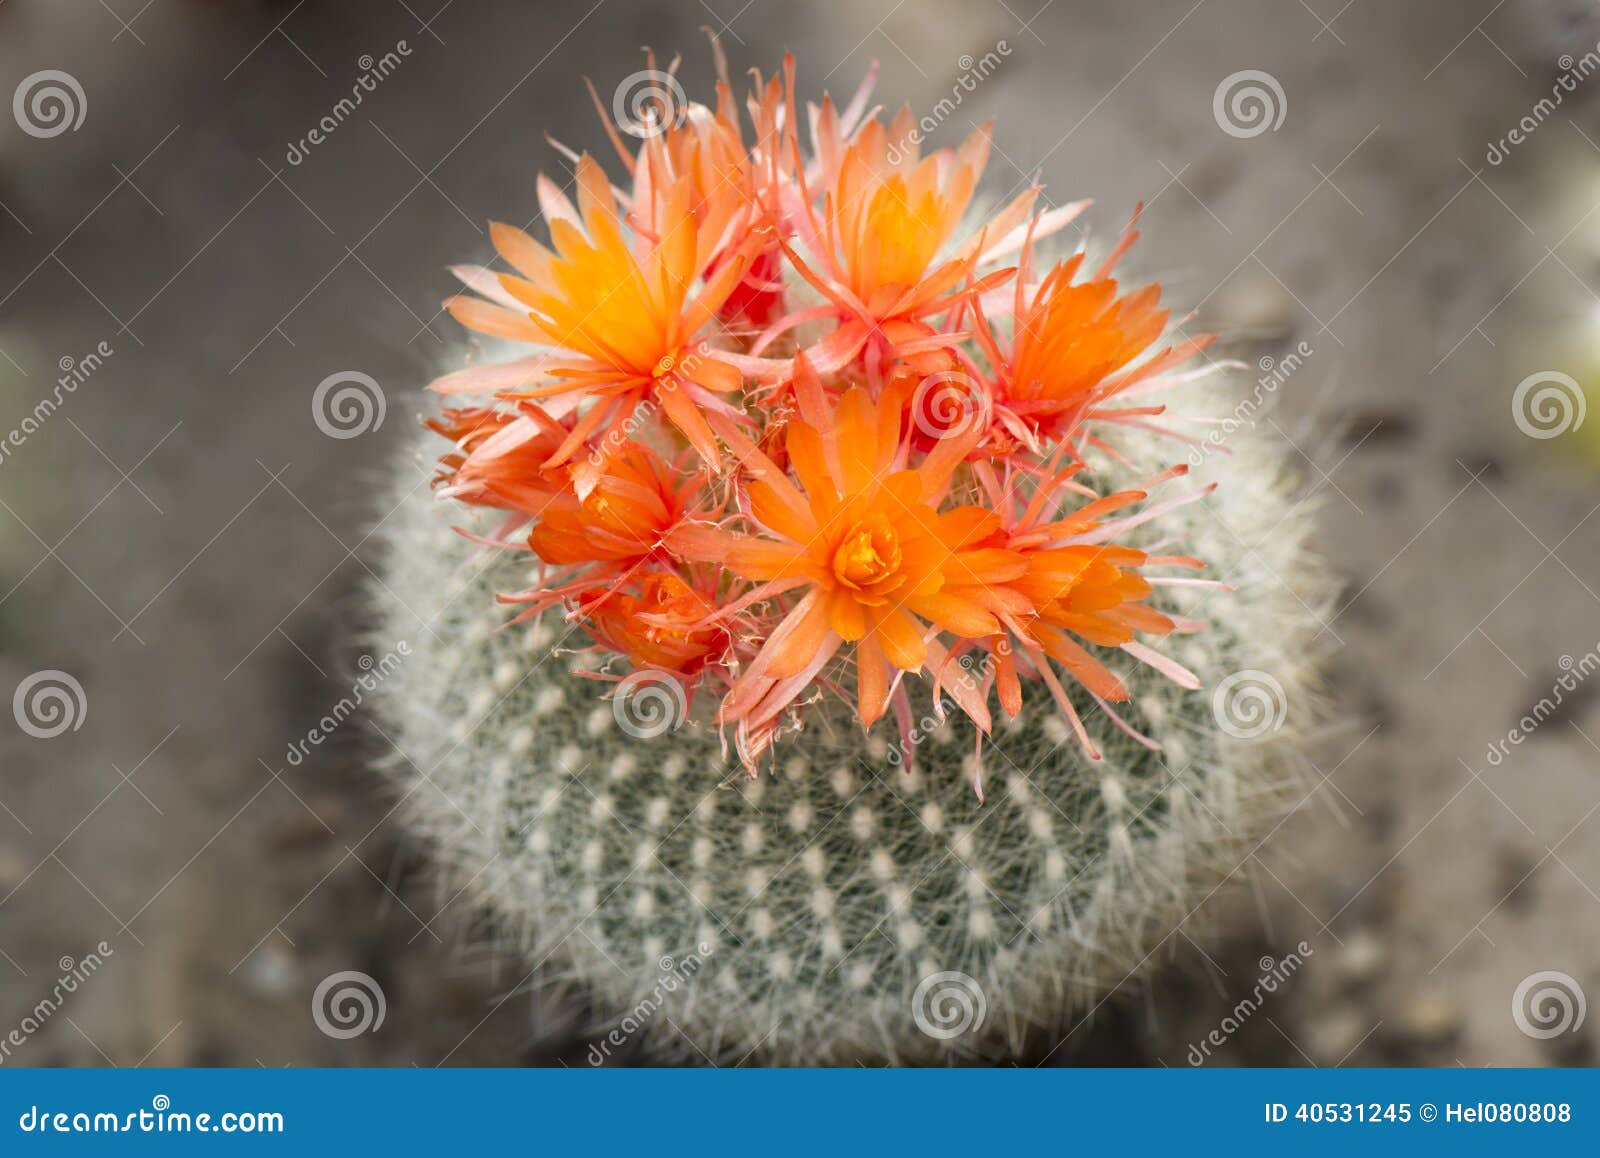 cactus orange blooms, cactus with blooming orange crown